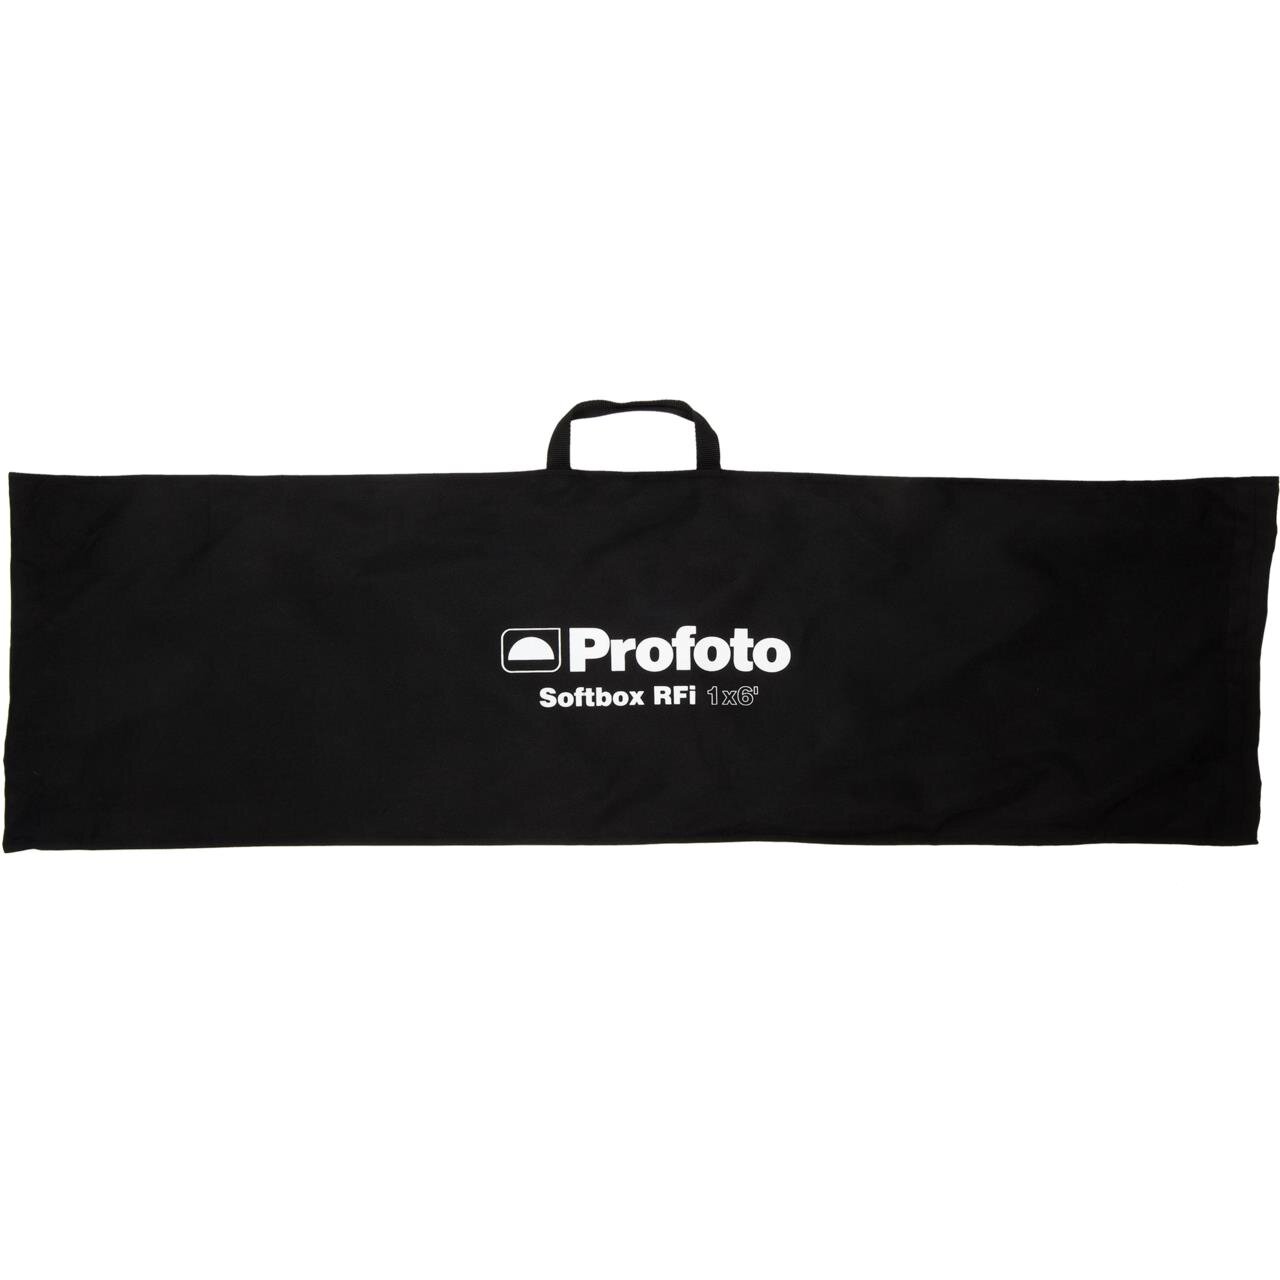 254710_f_profoto-rfi-softbox-1x6-bag_productimage.png.jpeg